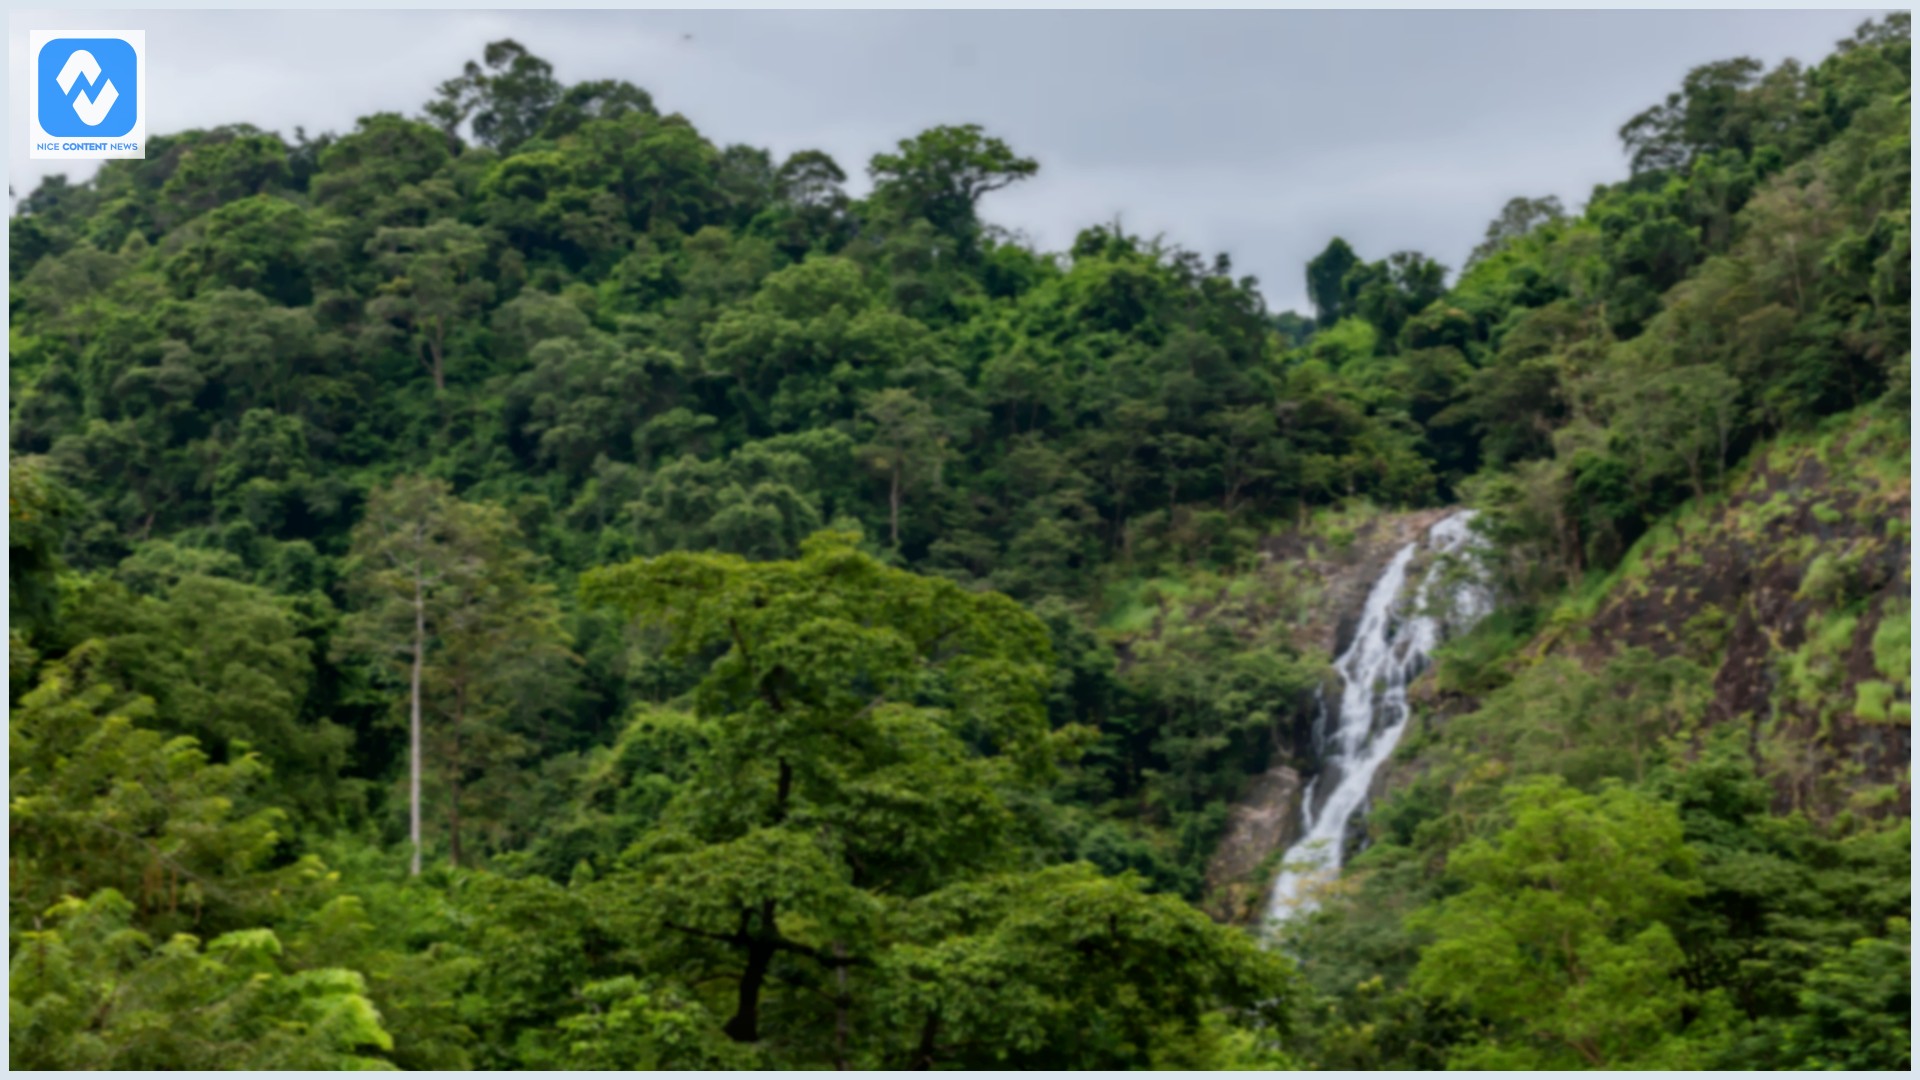 Cachoeiras brasileiras: conheça as 7 mais bonitas